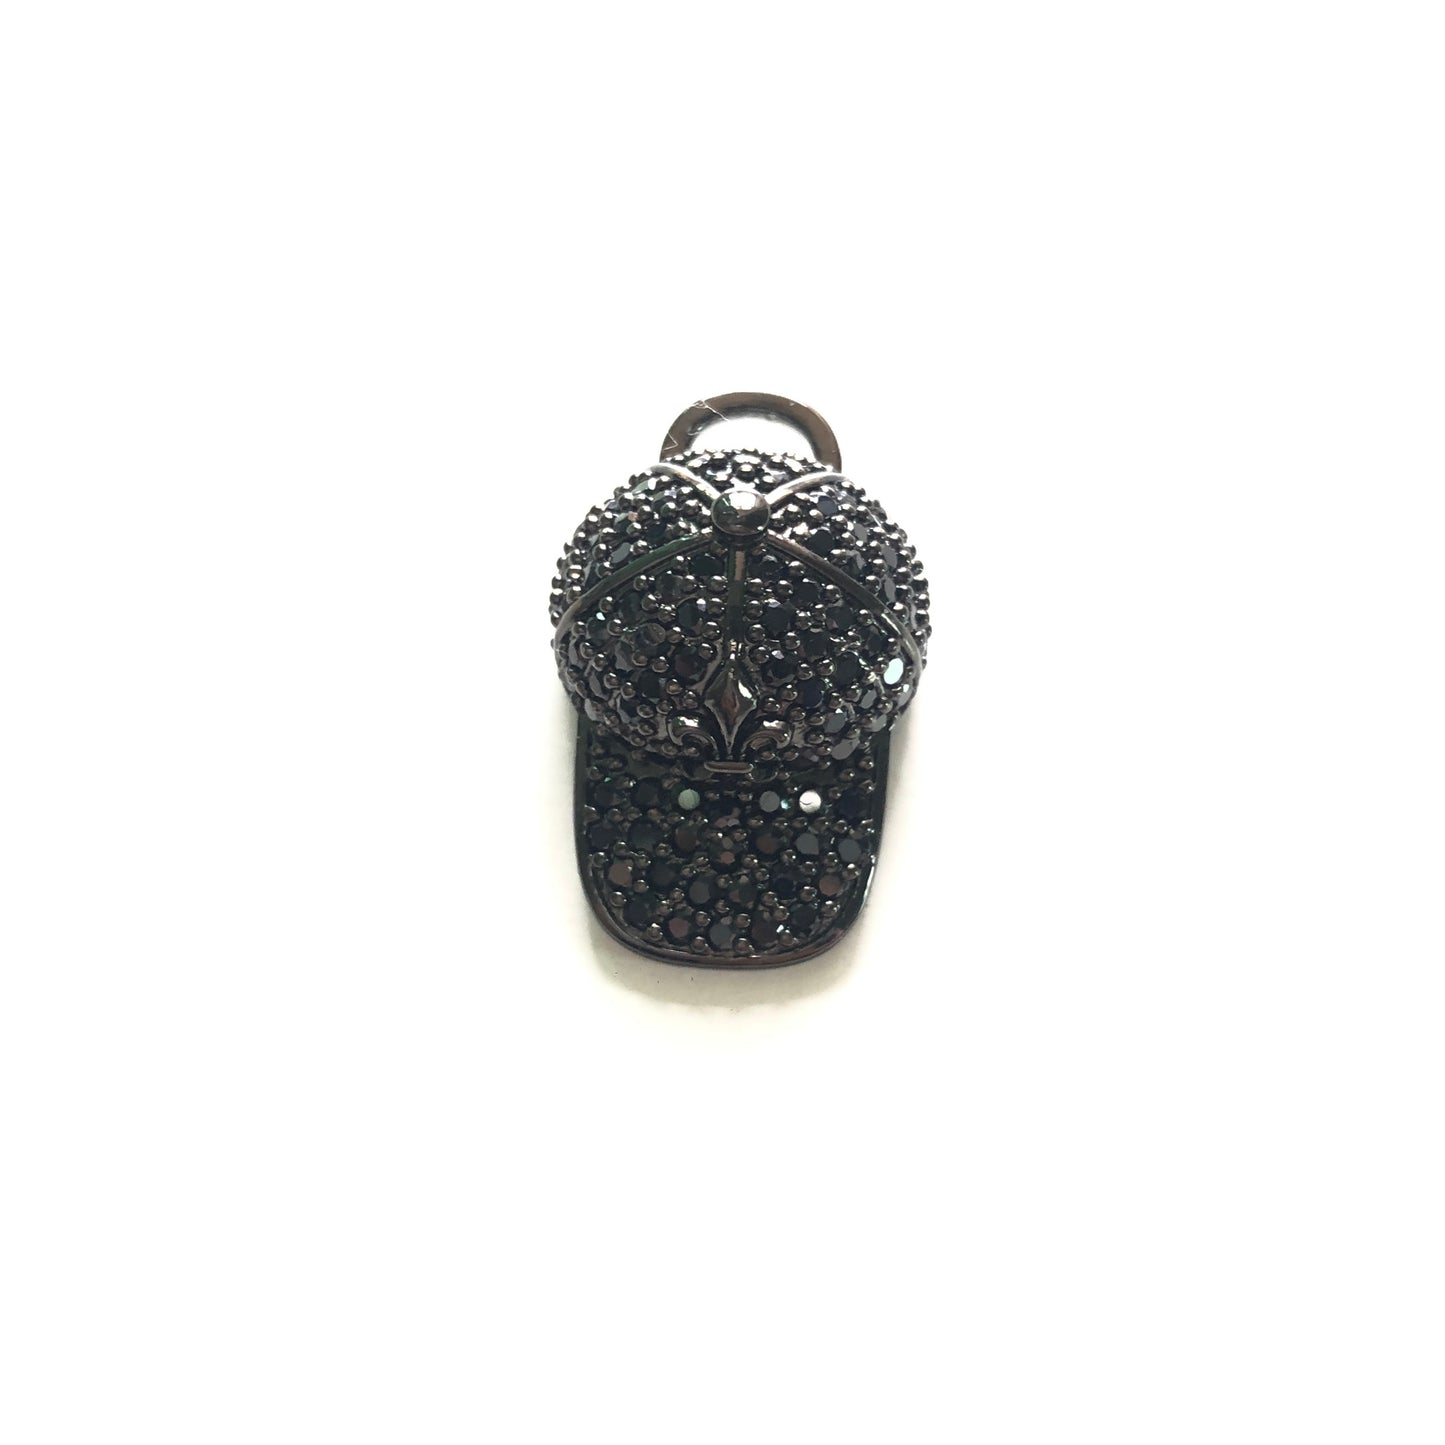 10pcs/lot 25*16mm CZ Pave Fleur De Lis BaseBall Cap Saints Charms Black on Black CZ Paved Charms Fashion Louisiana Inspired On Sale Charms Beads Beyond